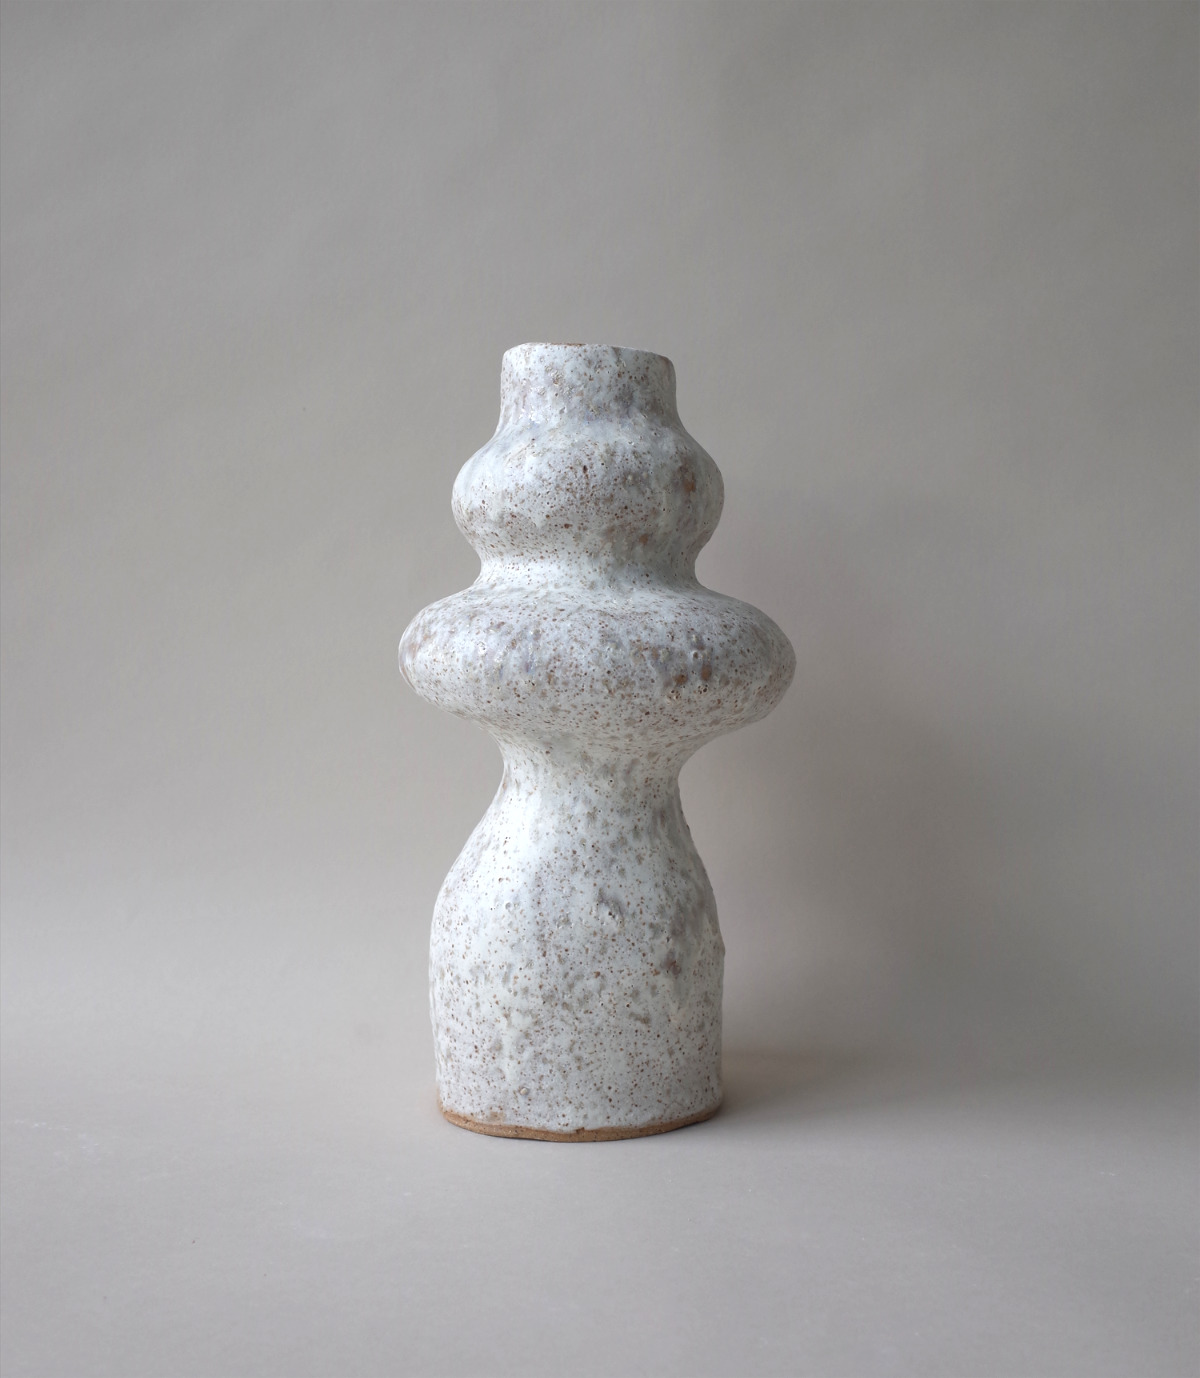 Product shot of minimalist ceramic figure with light glaze.